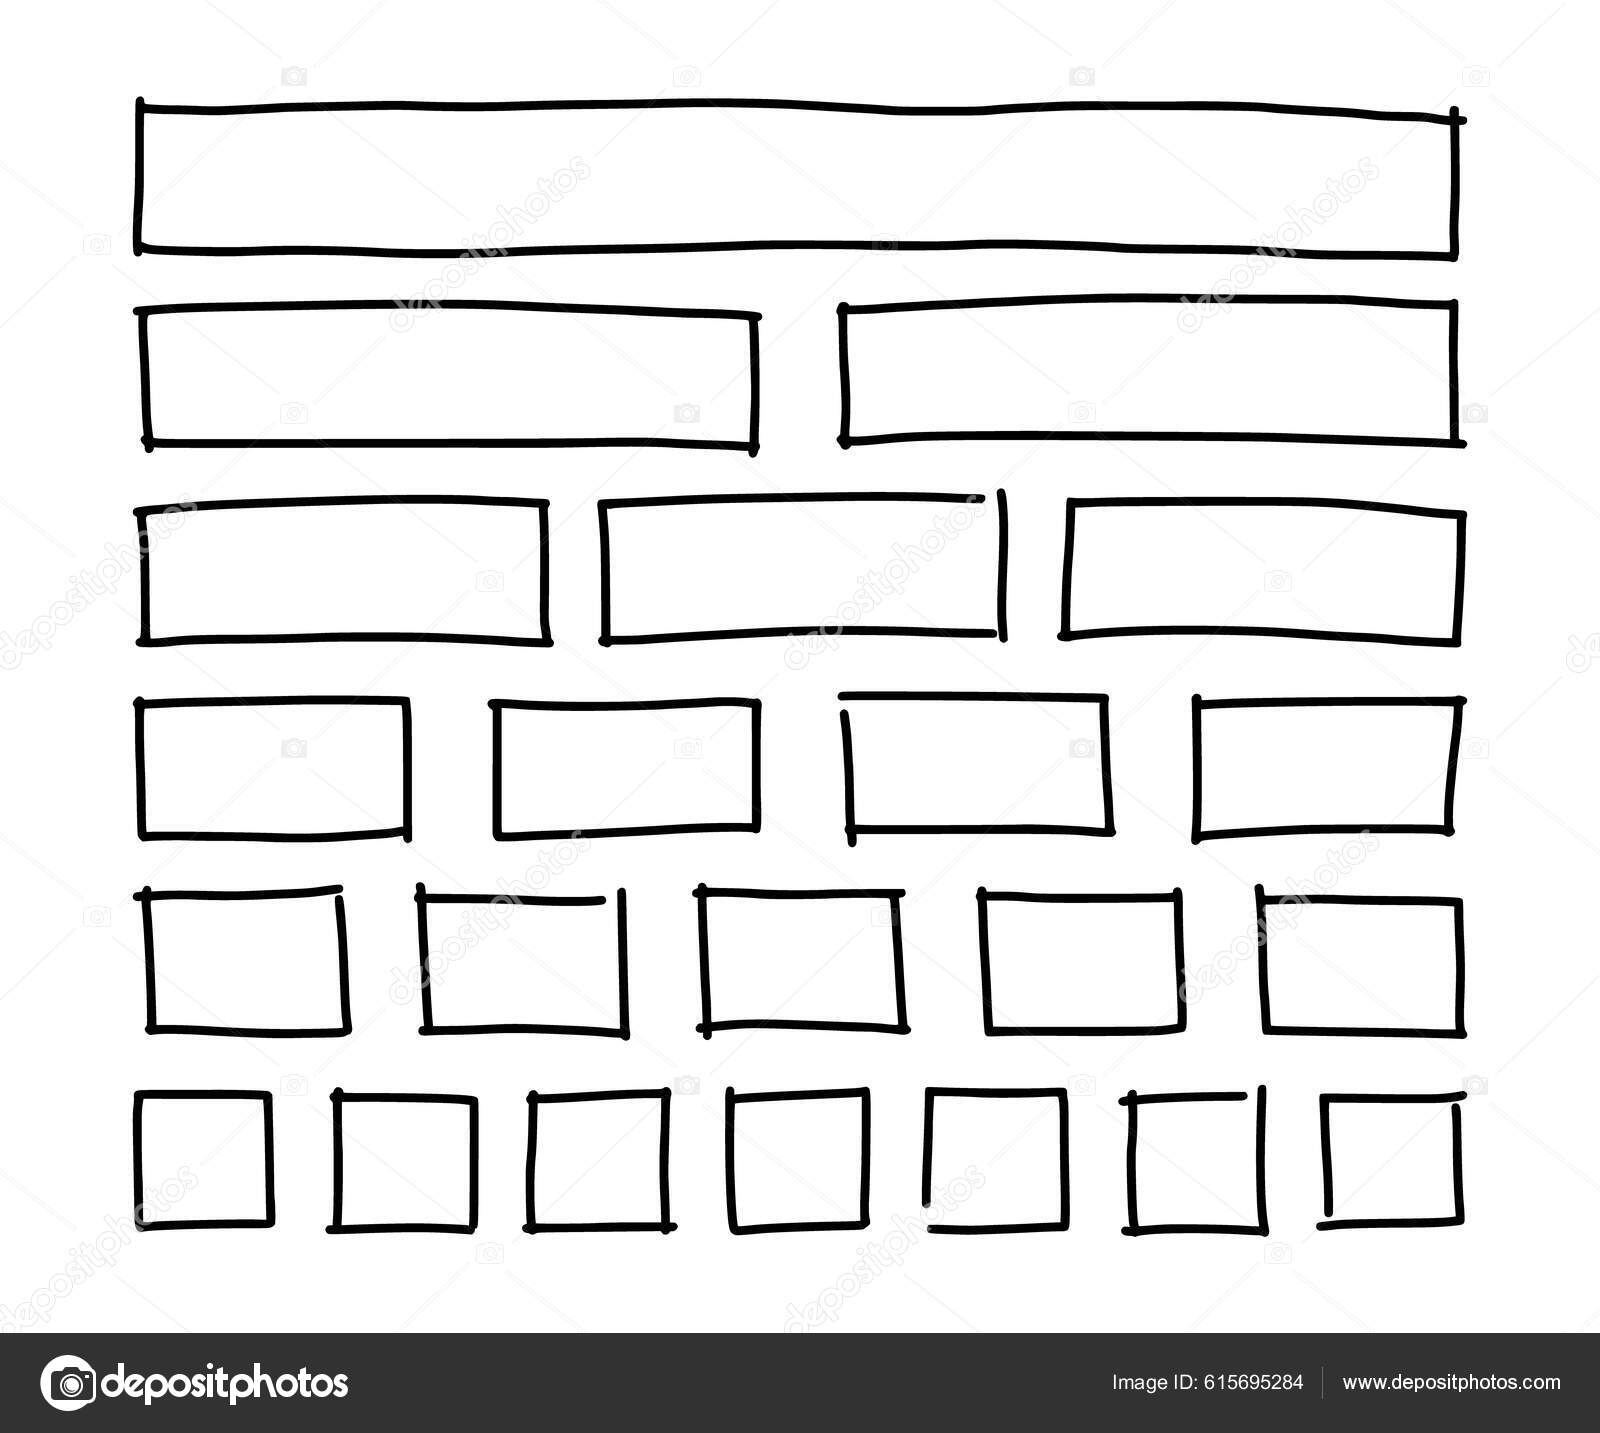 https://st.depositphotos.com/27760072/61569/v/1600/depositphotos_615695284-stock-illustration-free-hand-drawn-rectangles-squares.jpg